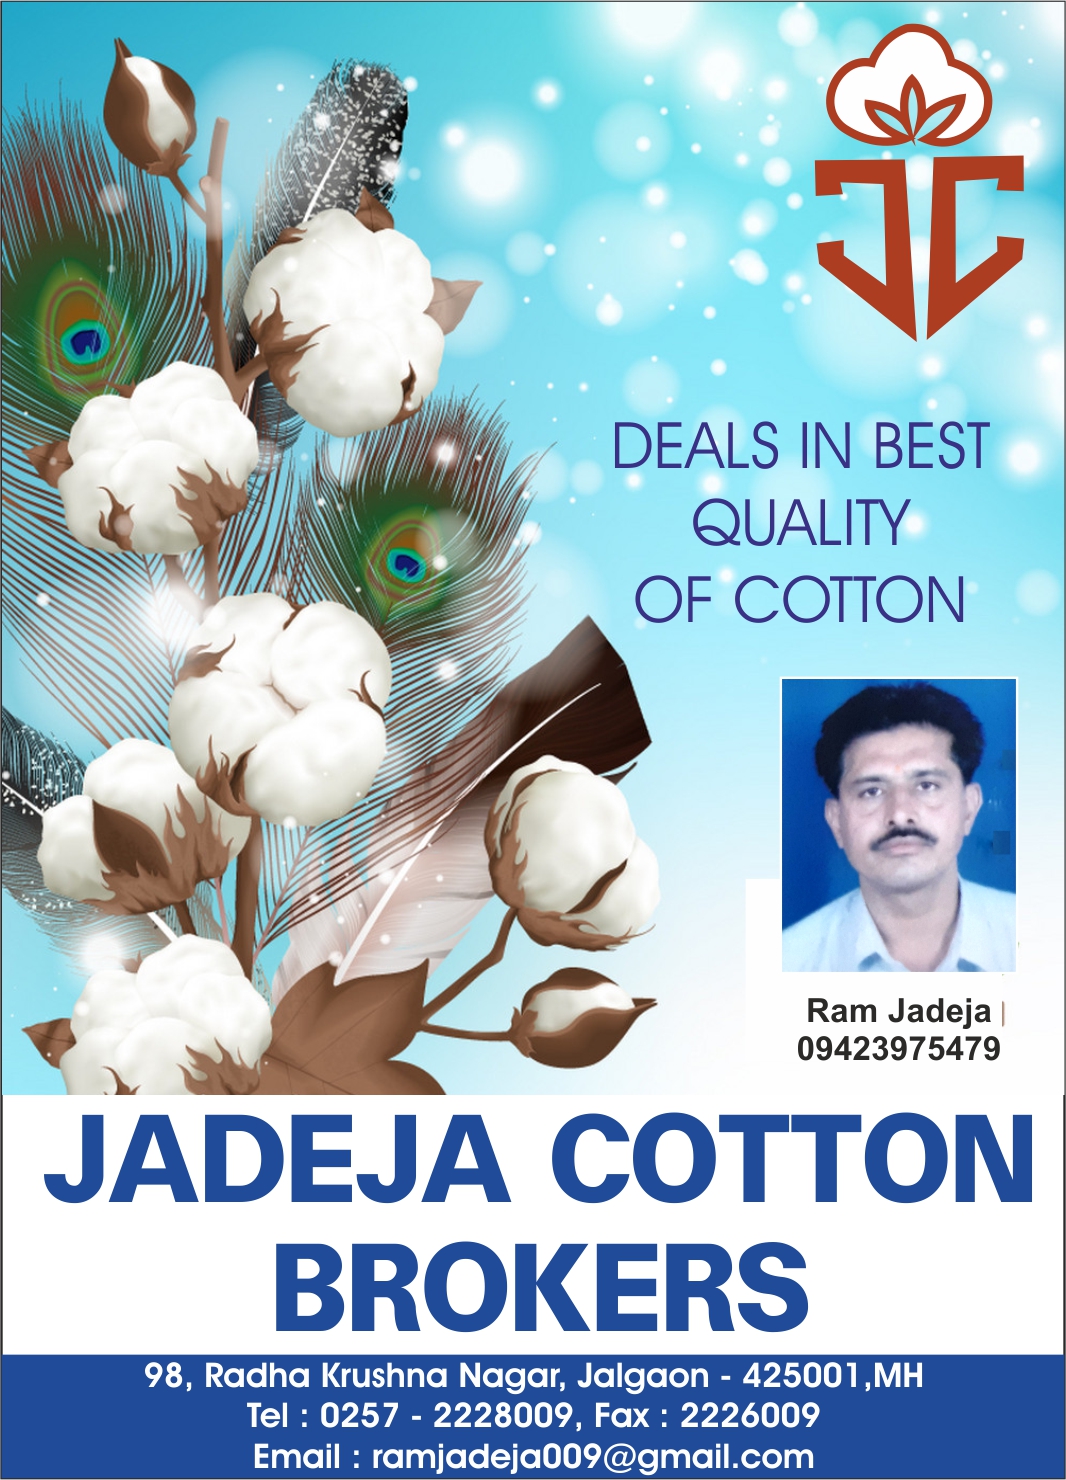 Jadeja Cotton Brokers